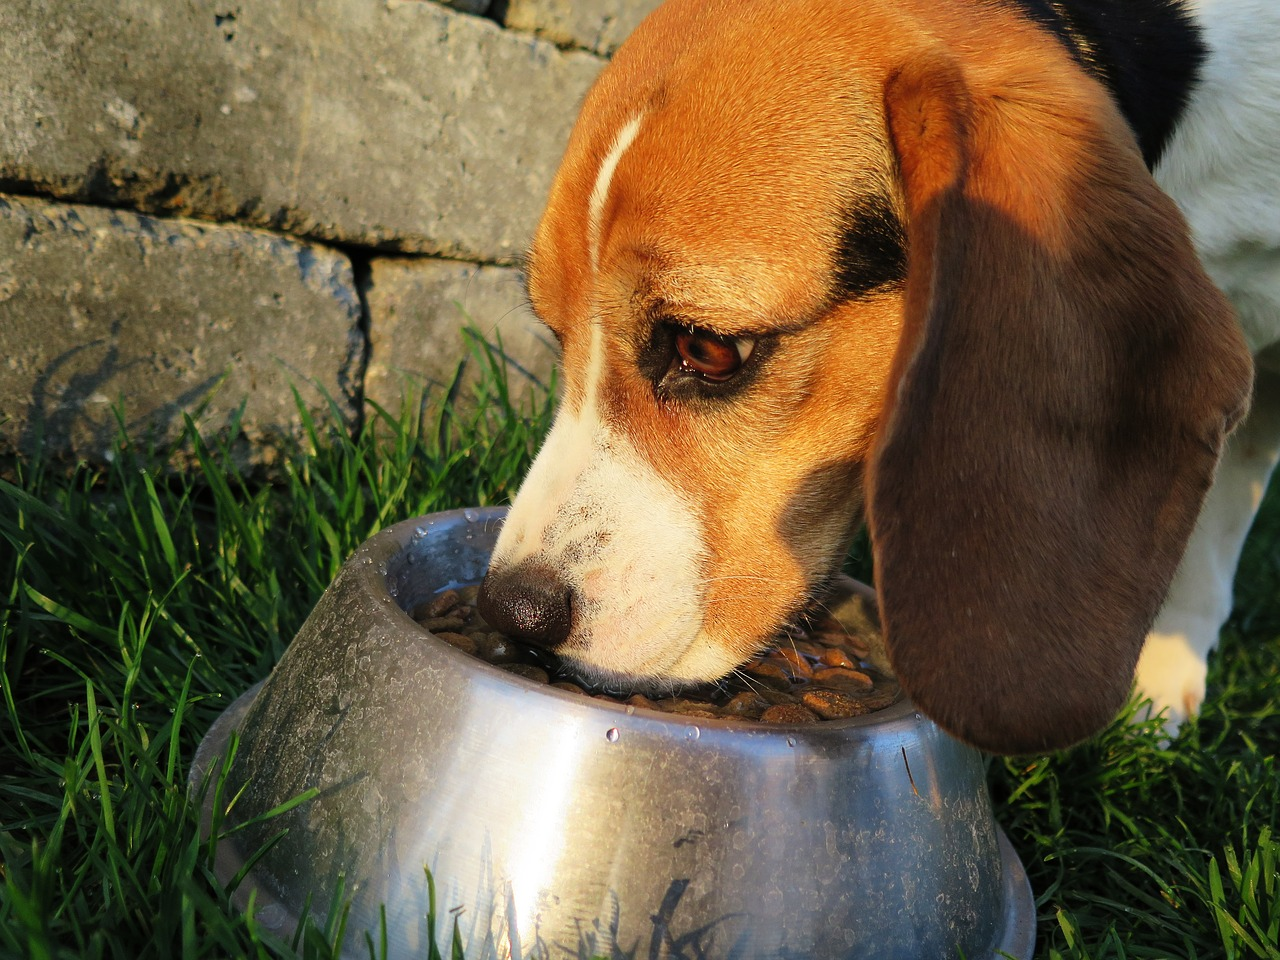 A dog eating a bowl of dog food